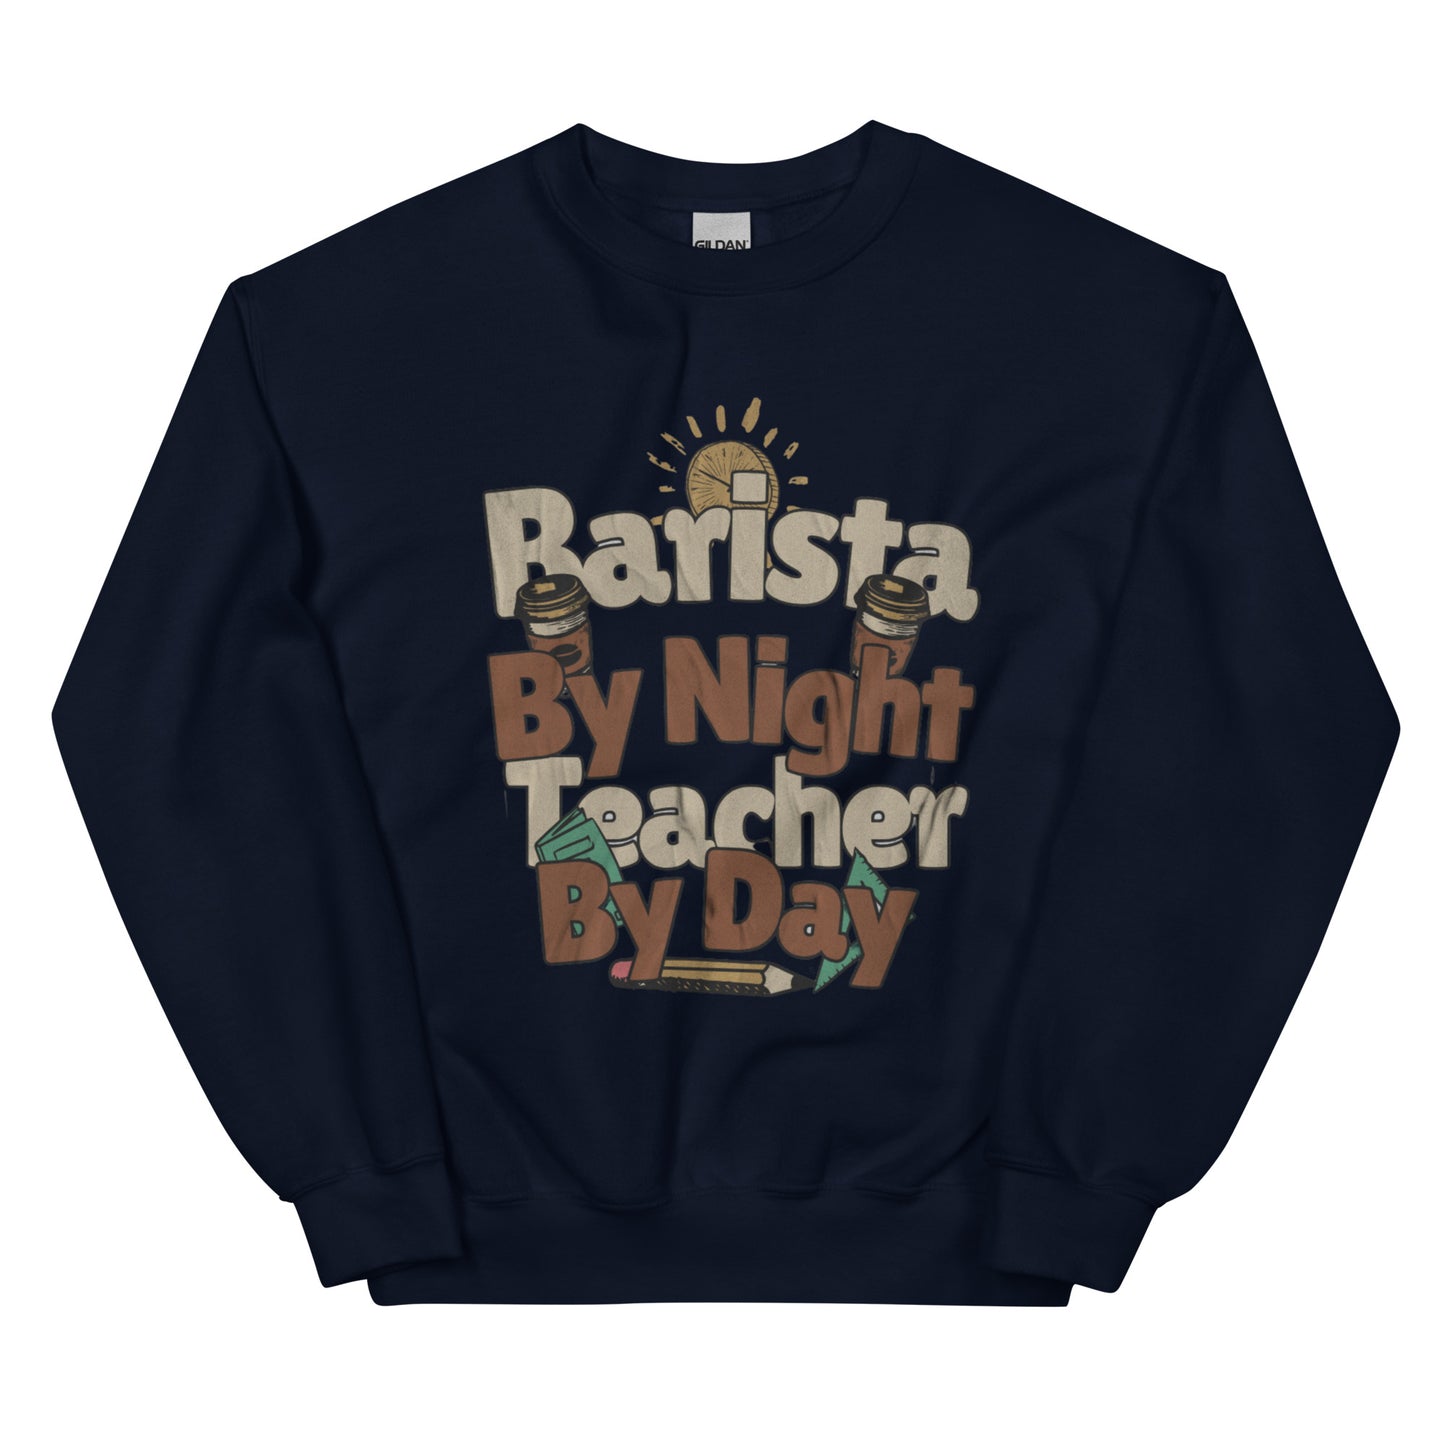 BARISTA BY NIGHT TEACHER BY DAY - Sweat-shirt unisexe